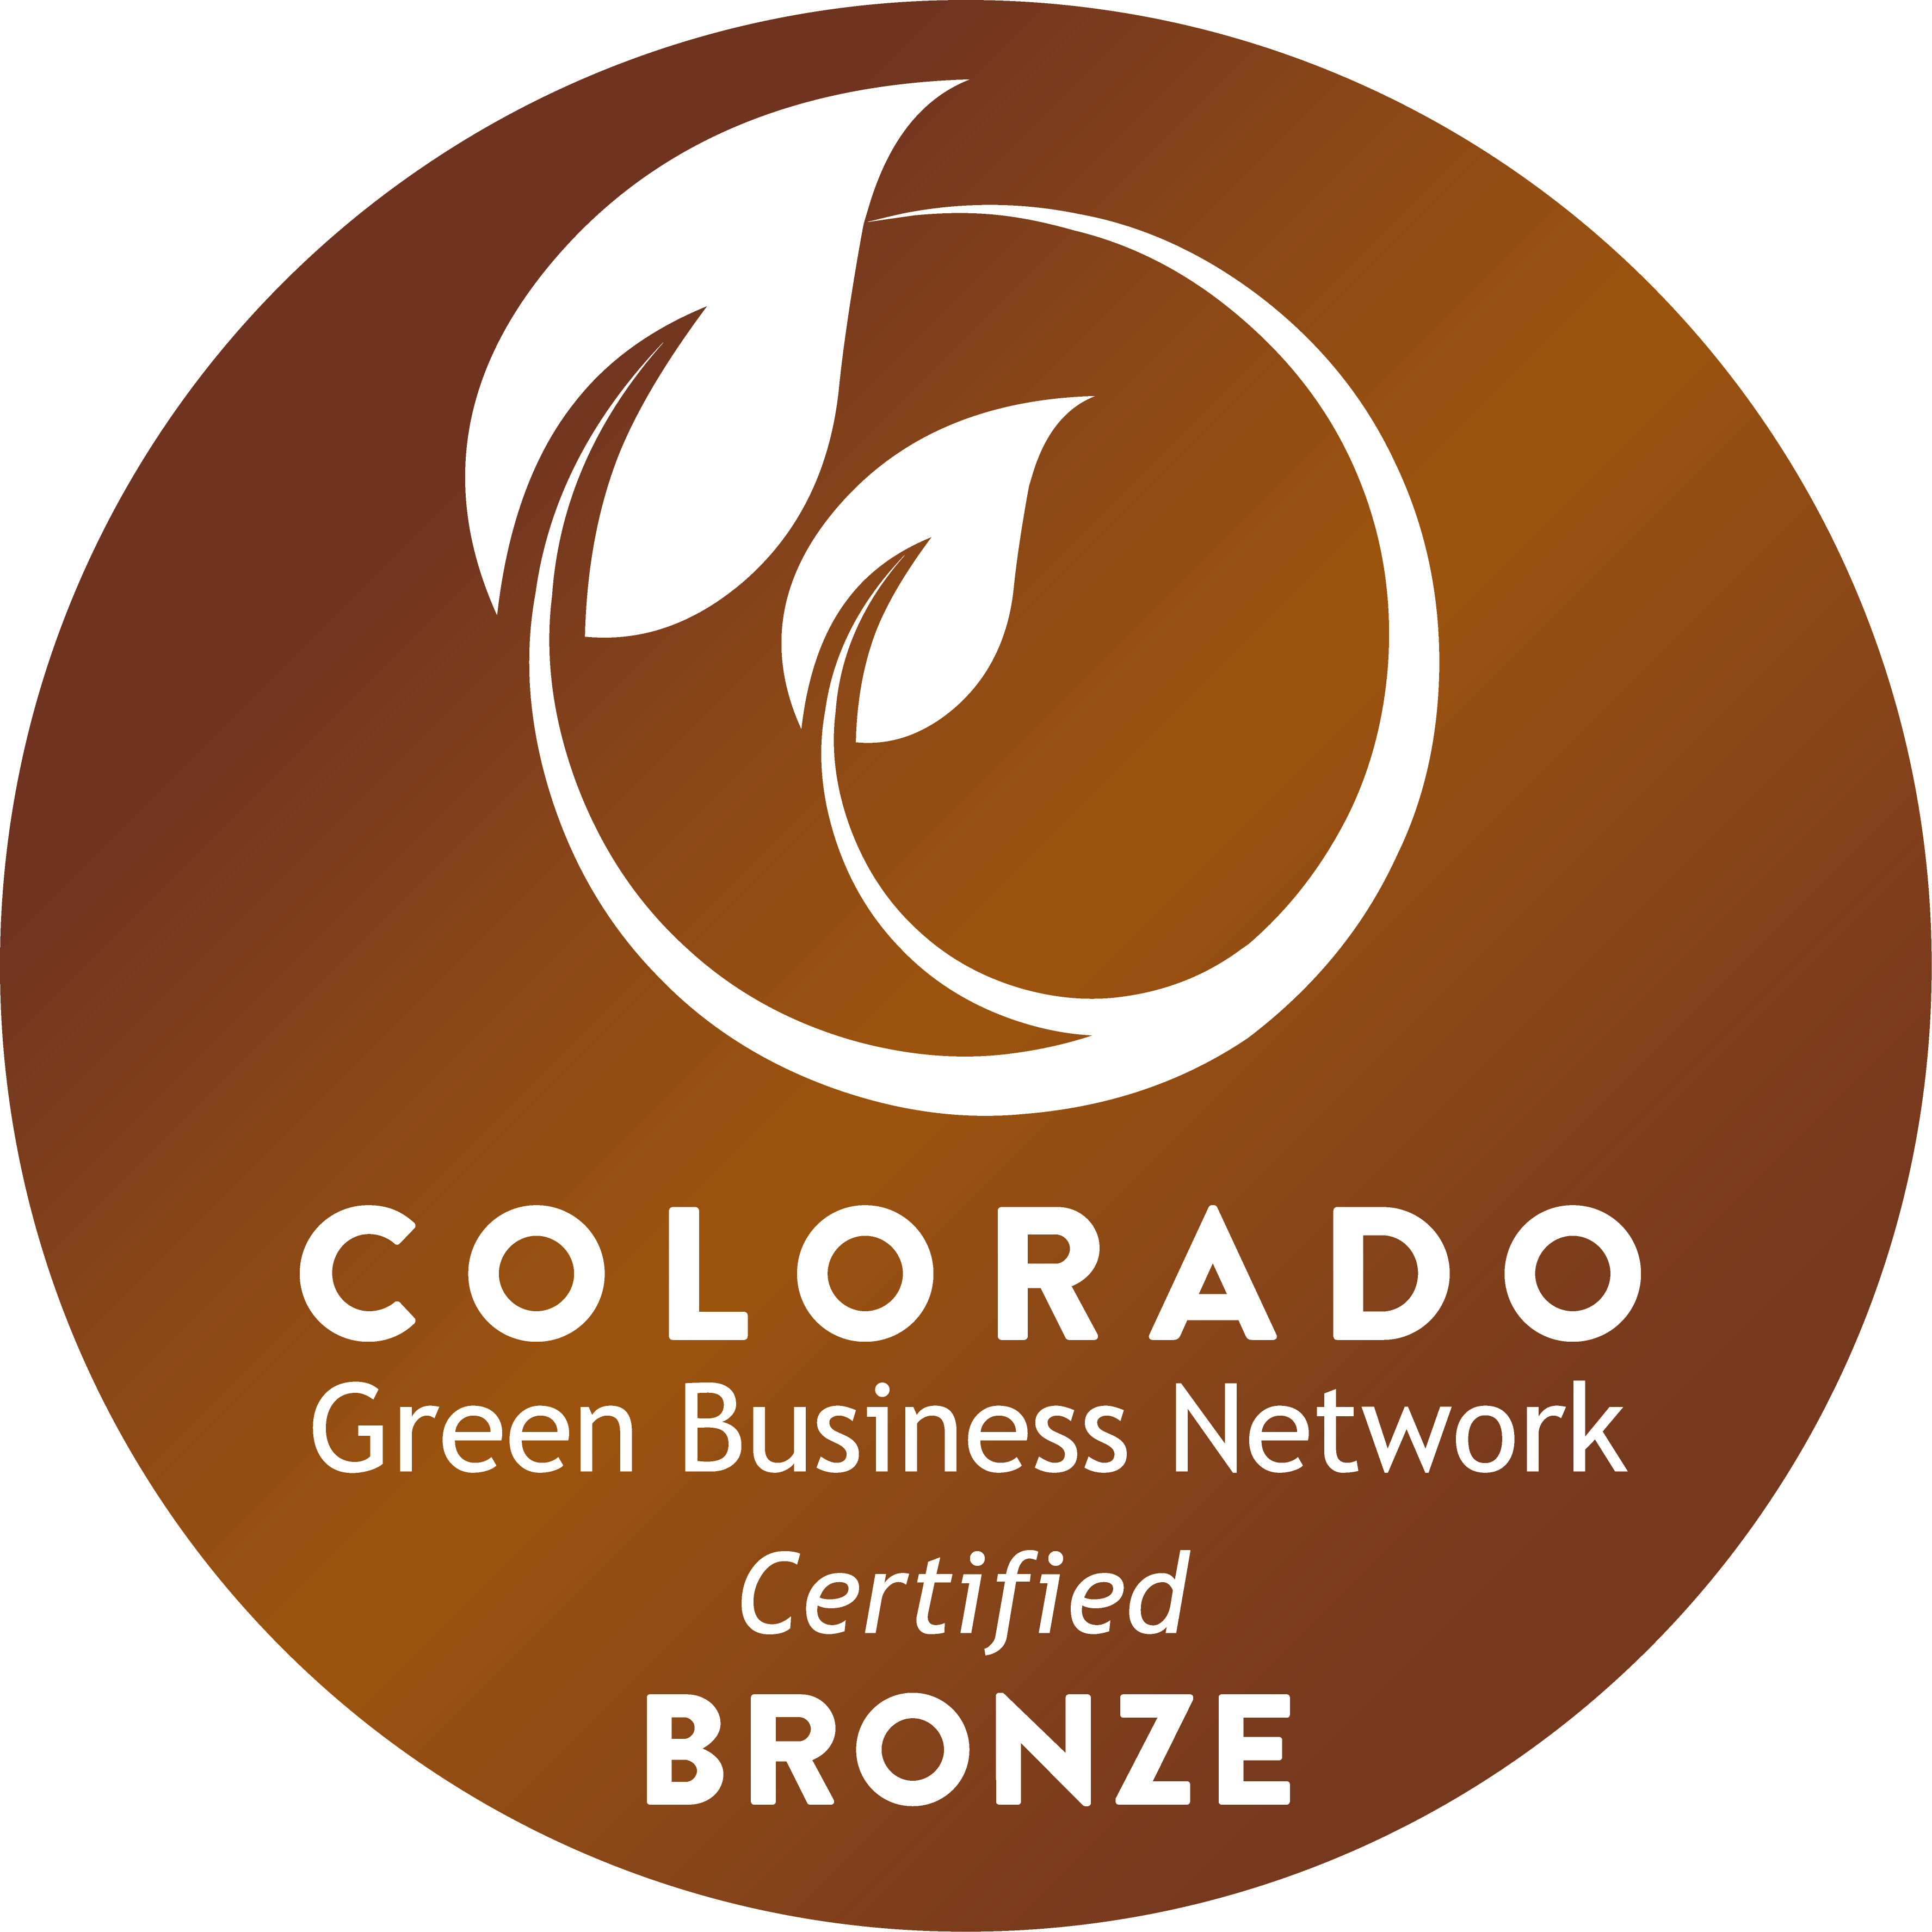 Colorado Green Business Network Certified - Bronze